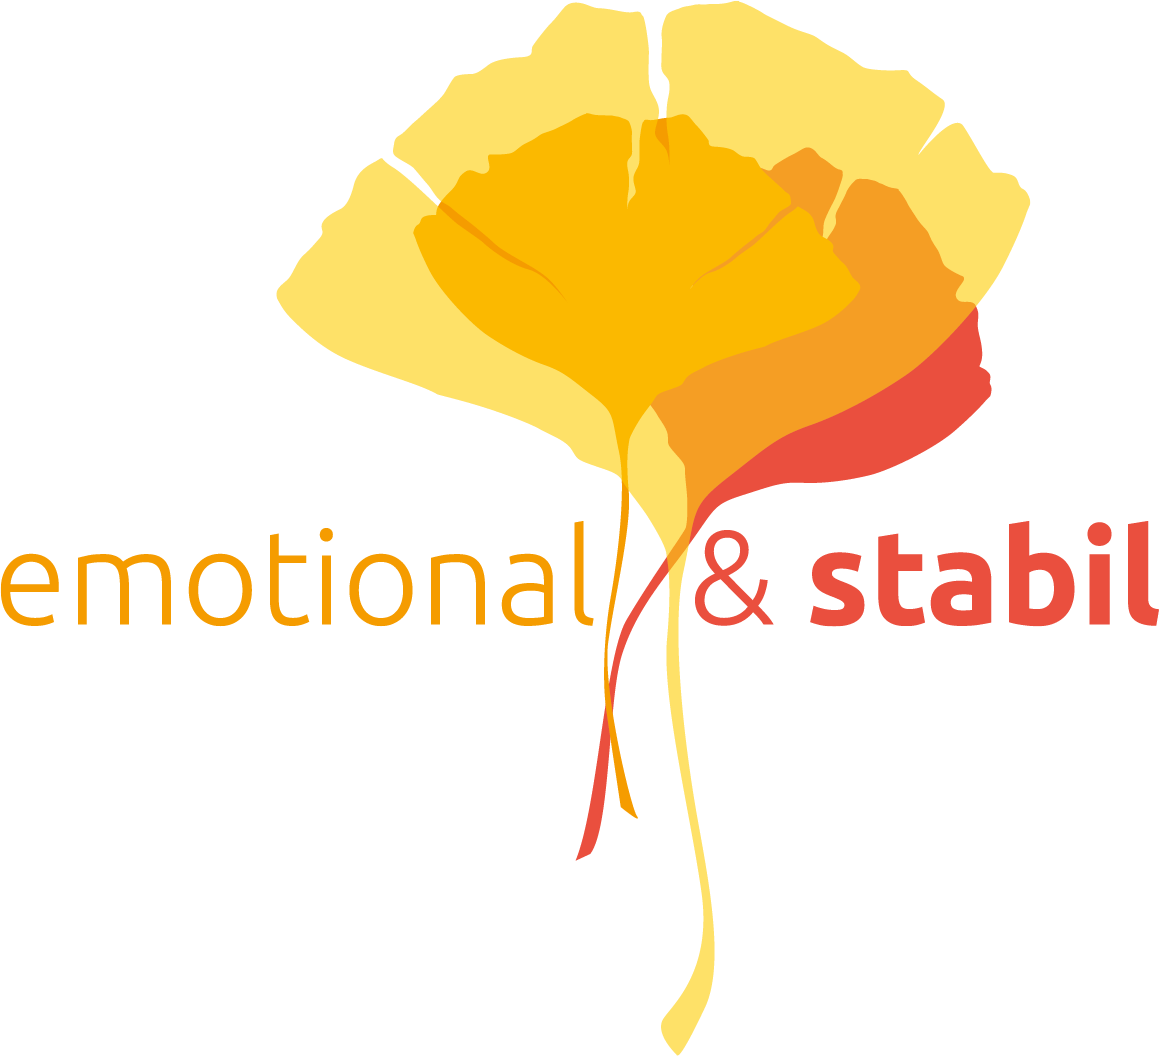 Emotional & Stabil